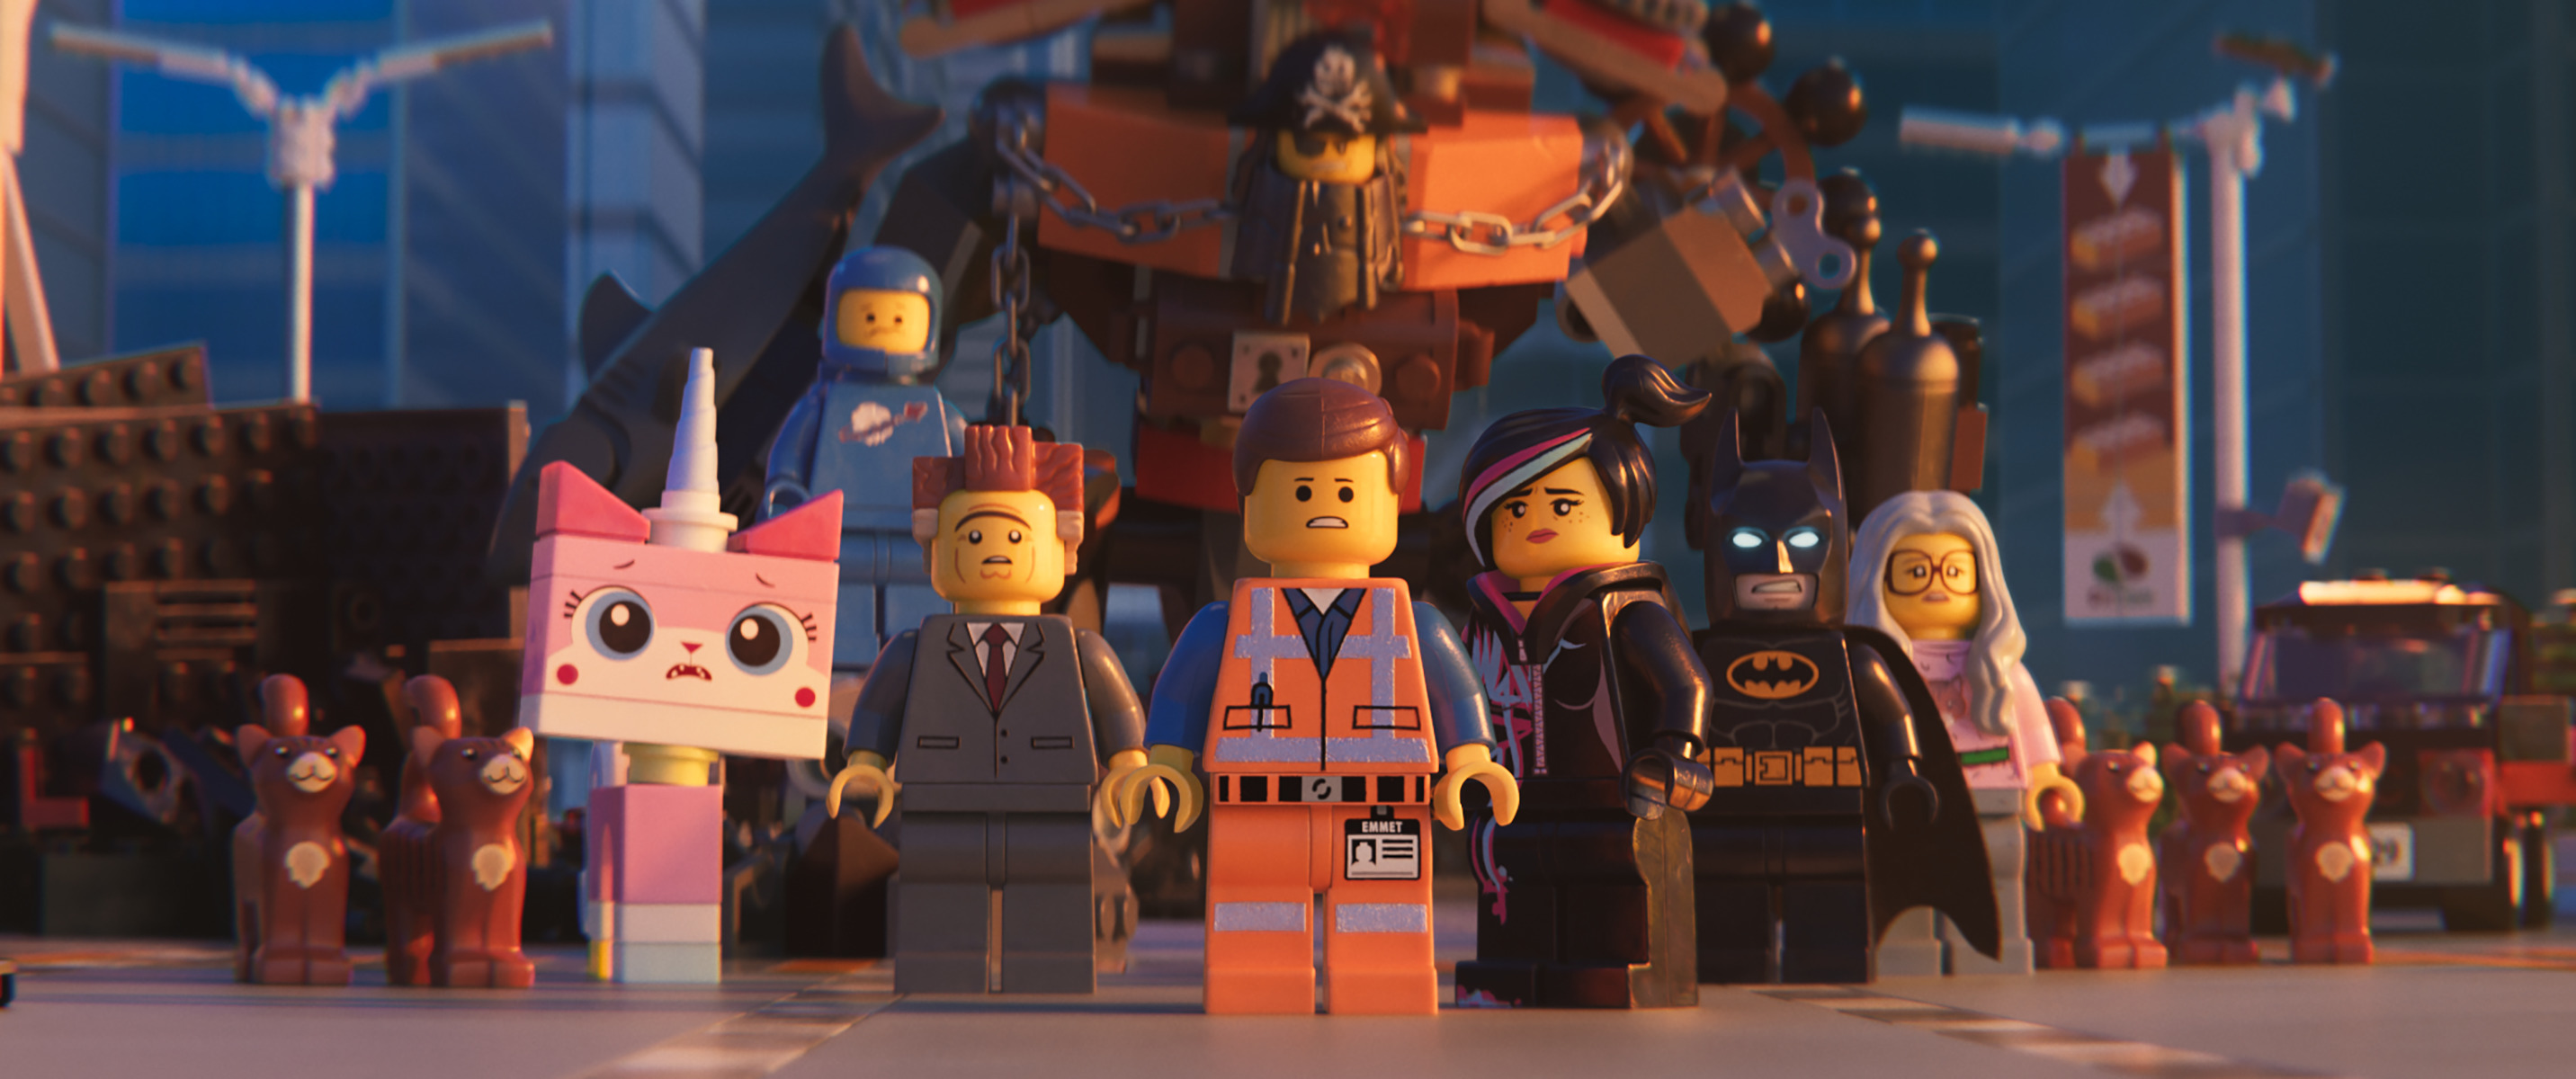 naturlig eftertænksom sammensnøret The Lego Movie 2: The Second Part - Meet the cast | Gallery | Wonderwall.com